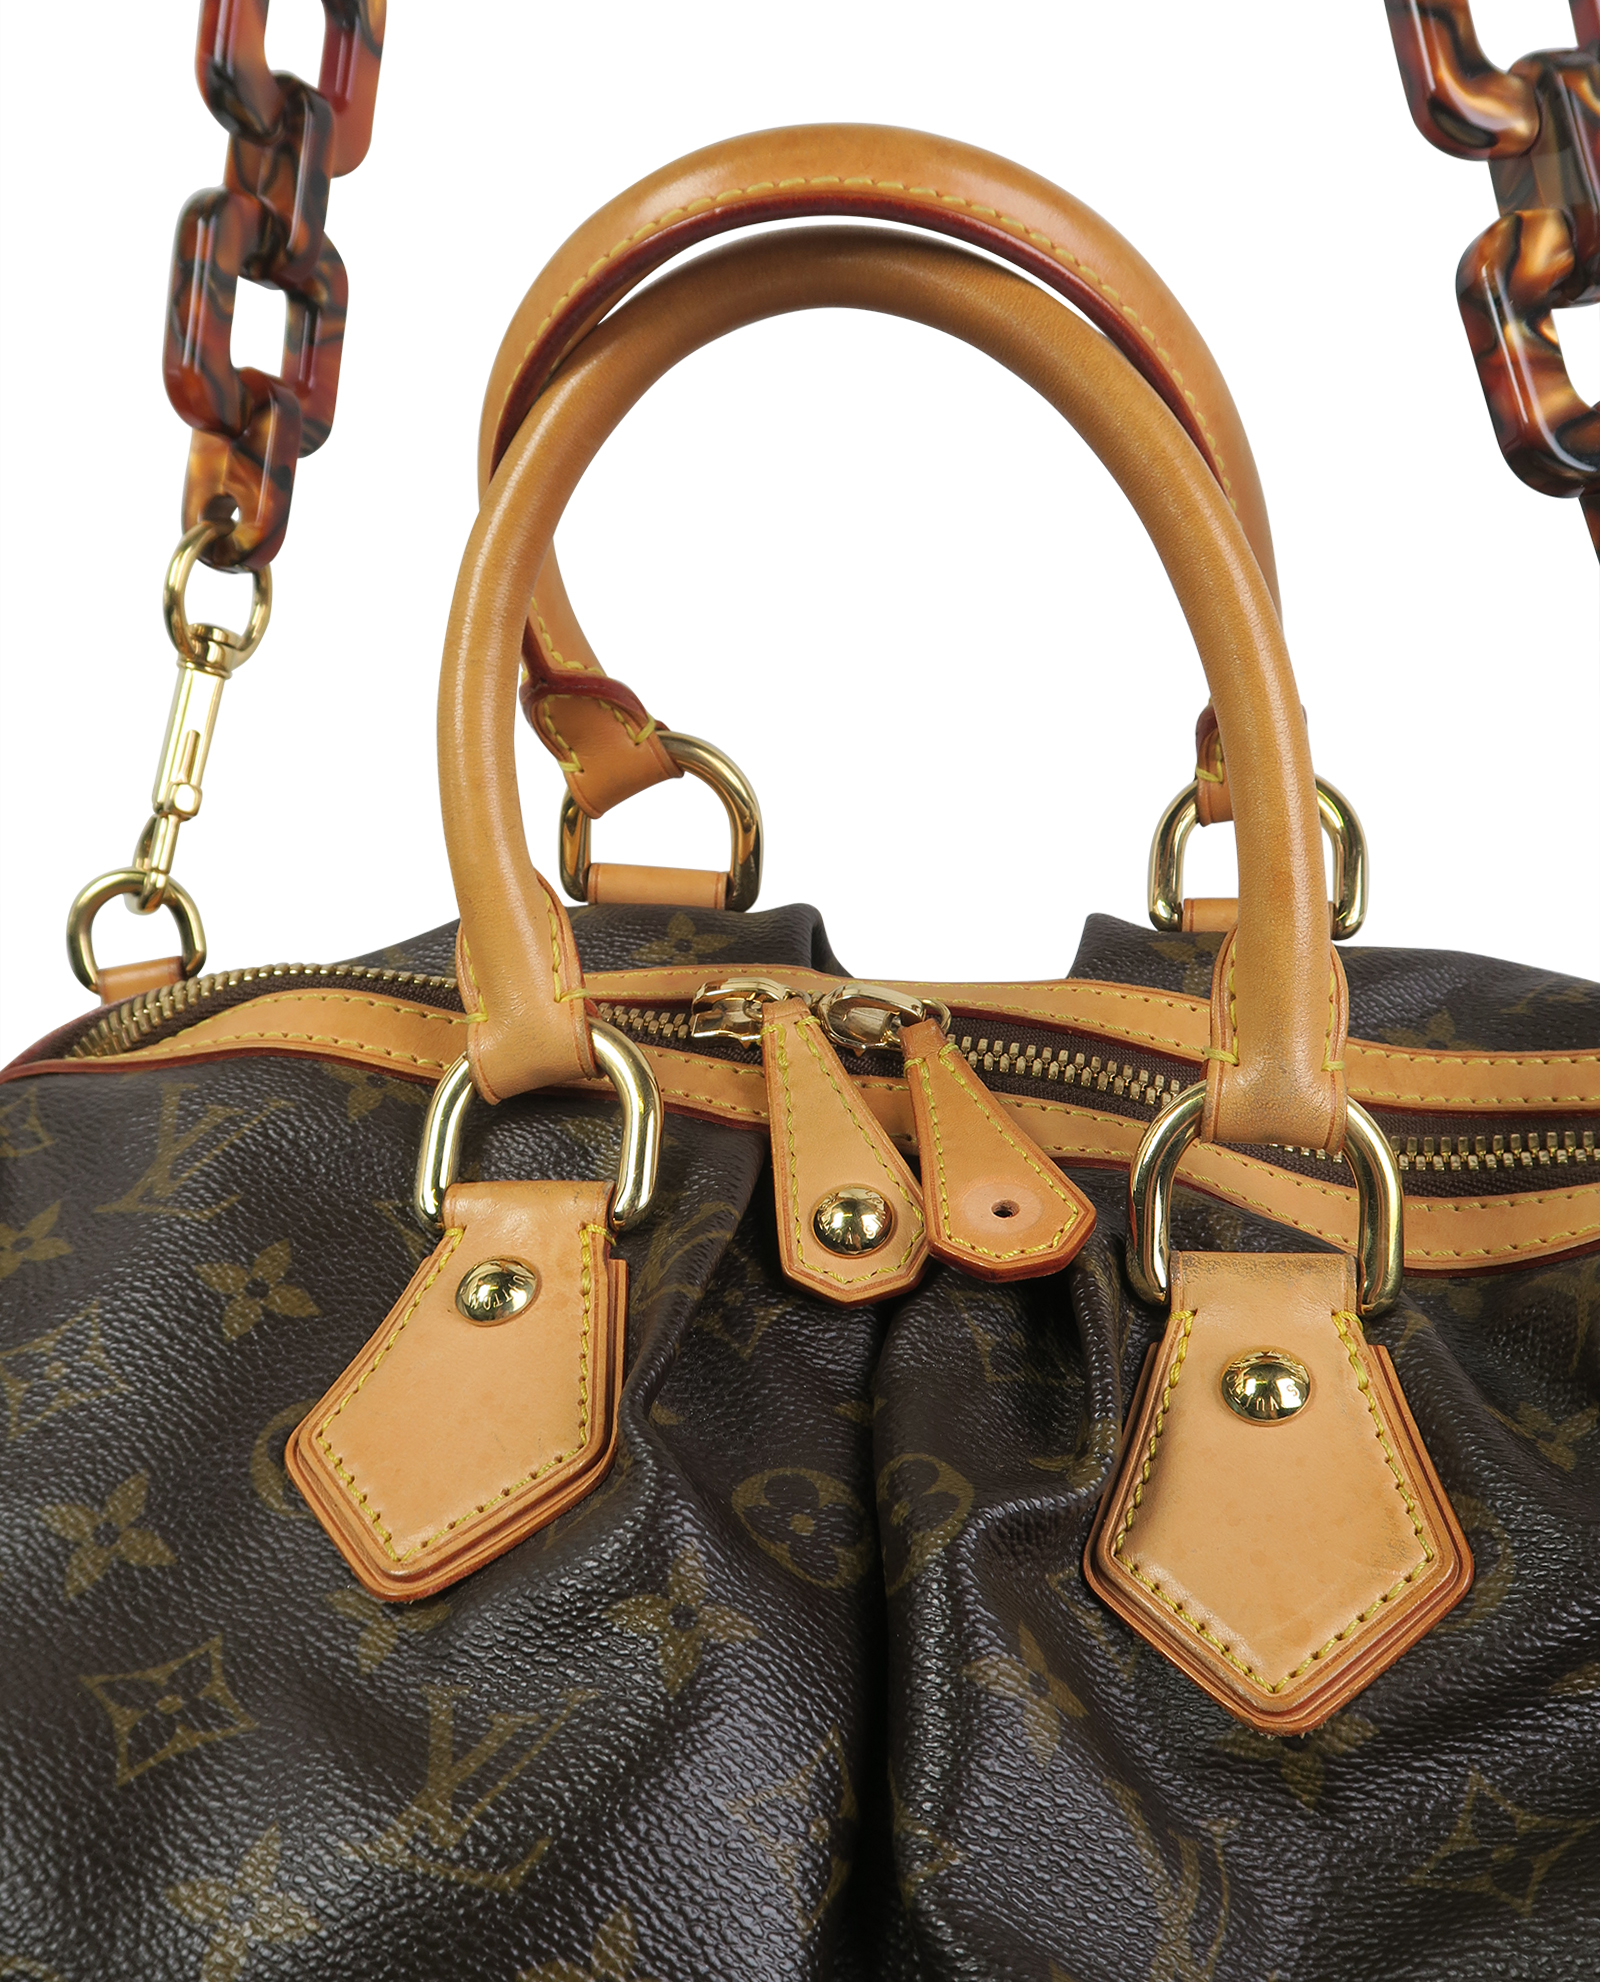 Stephen sprouse boston leather handbag Louis Vuitton Black in